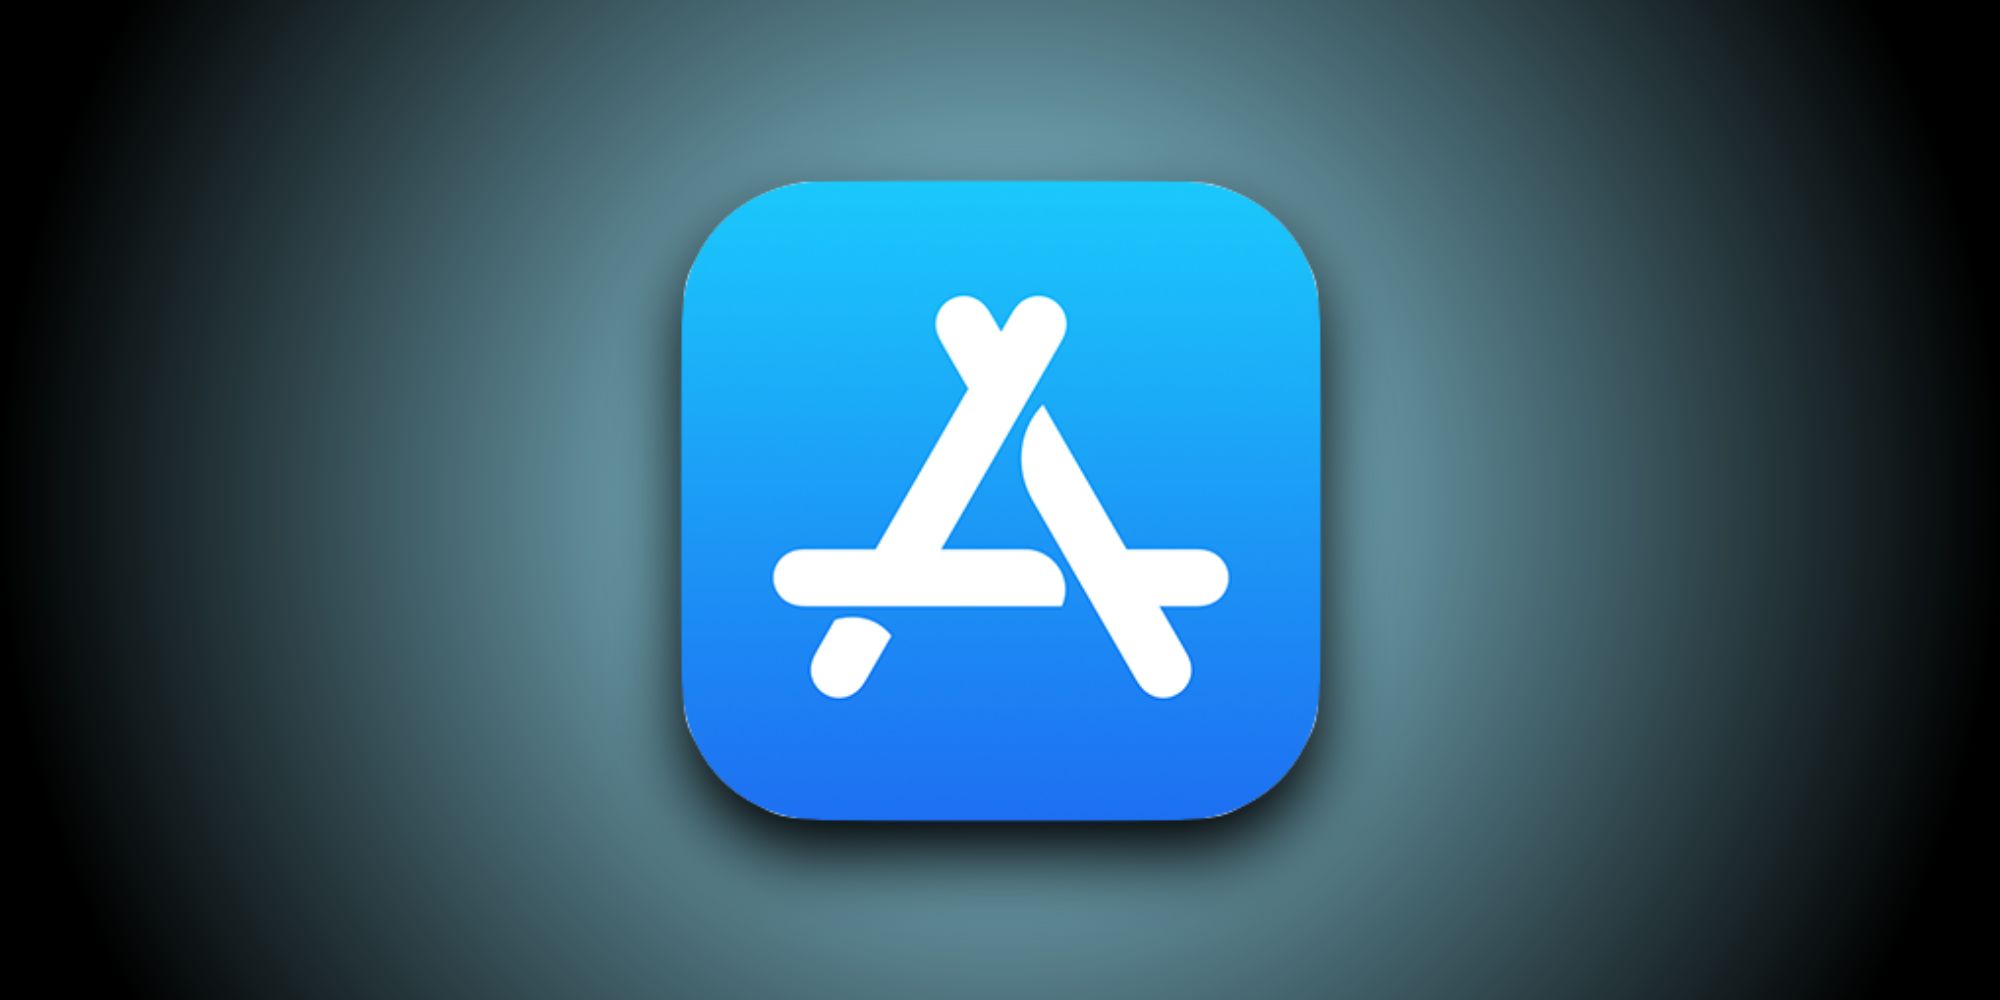 Apple App Store logo against a dark background